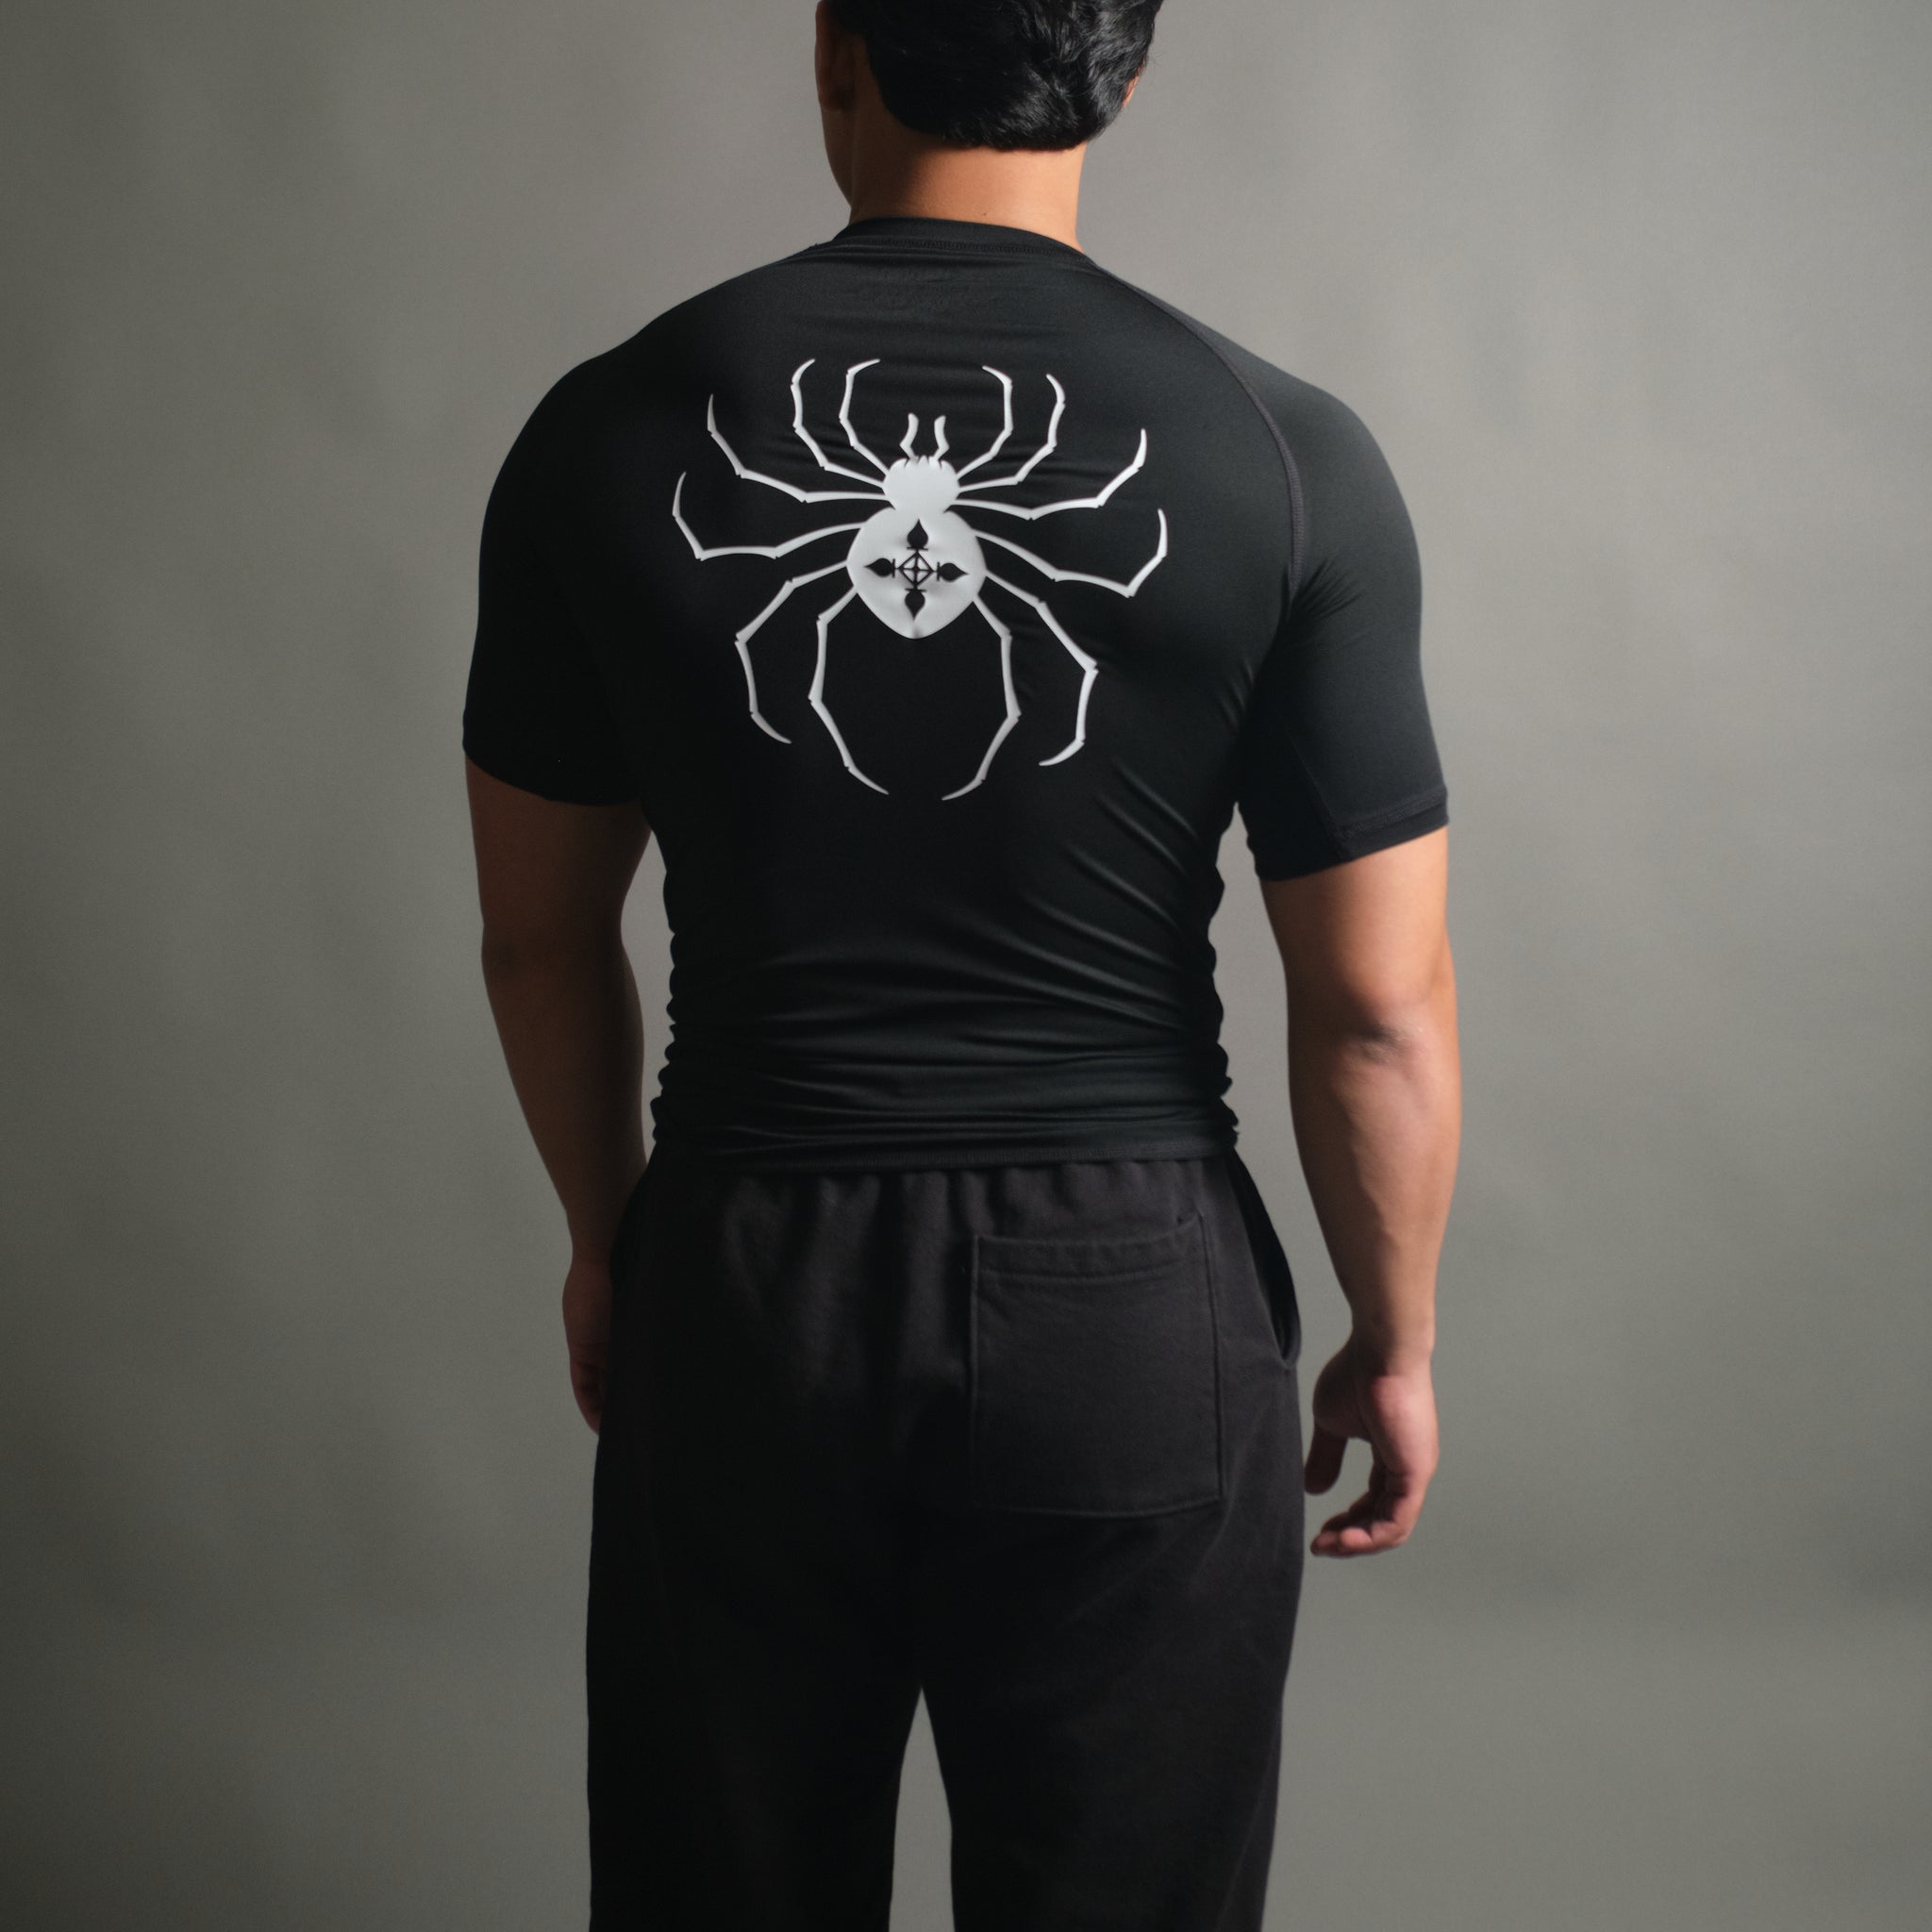 Chrollo Spider Compression Short Sleeve in Black